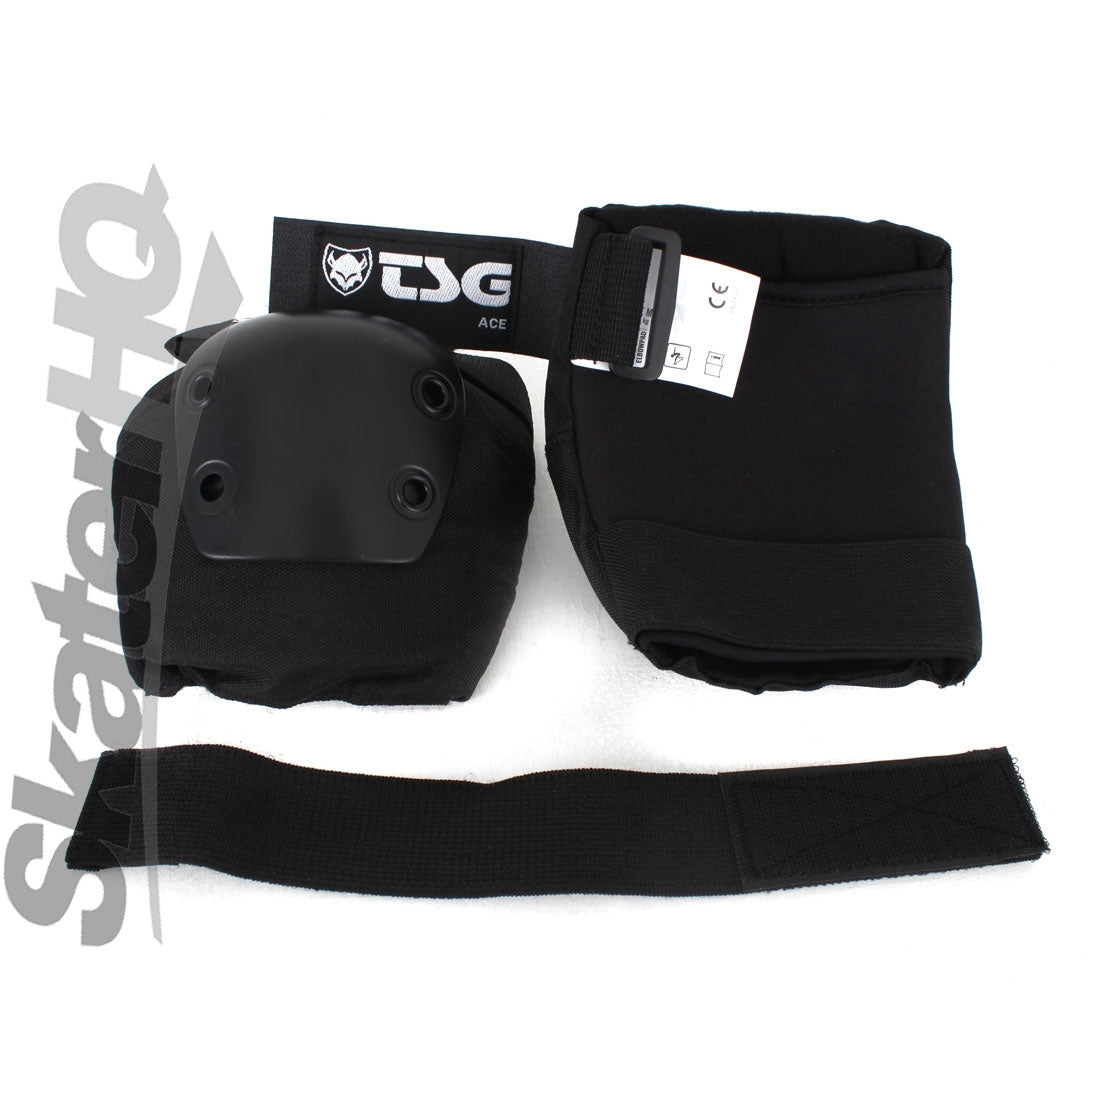 TSG Elbow Ace Pads - Medium Protective Gear